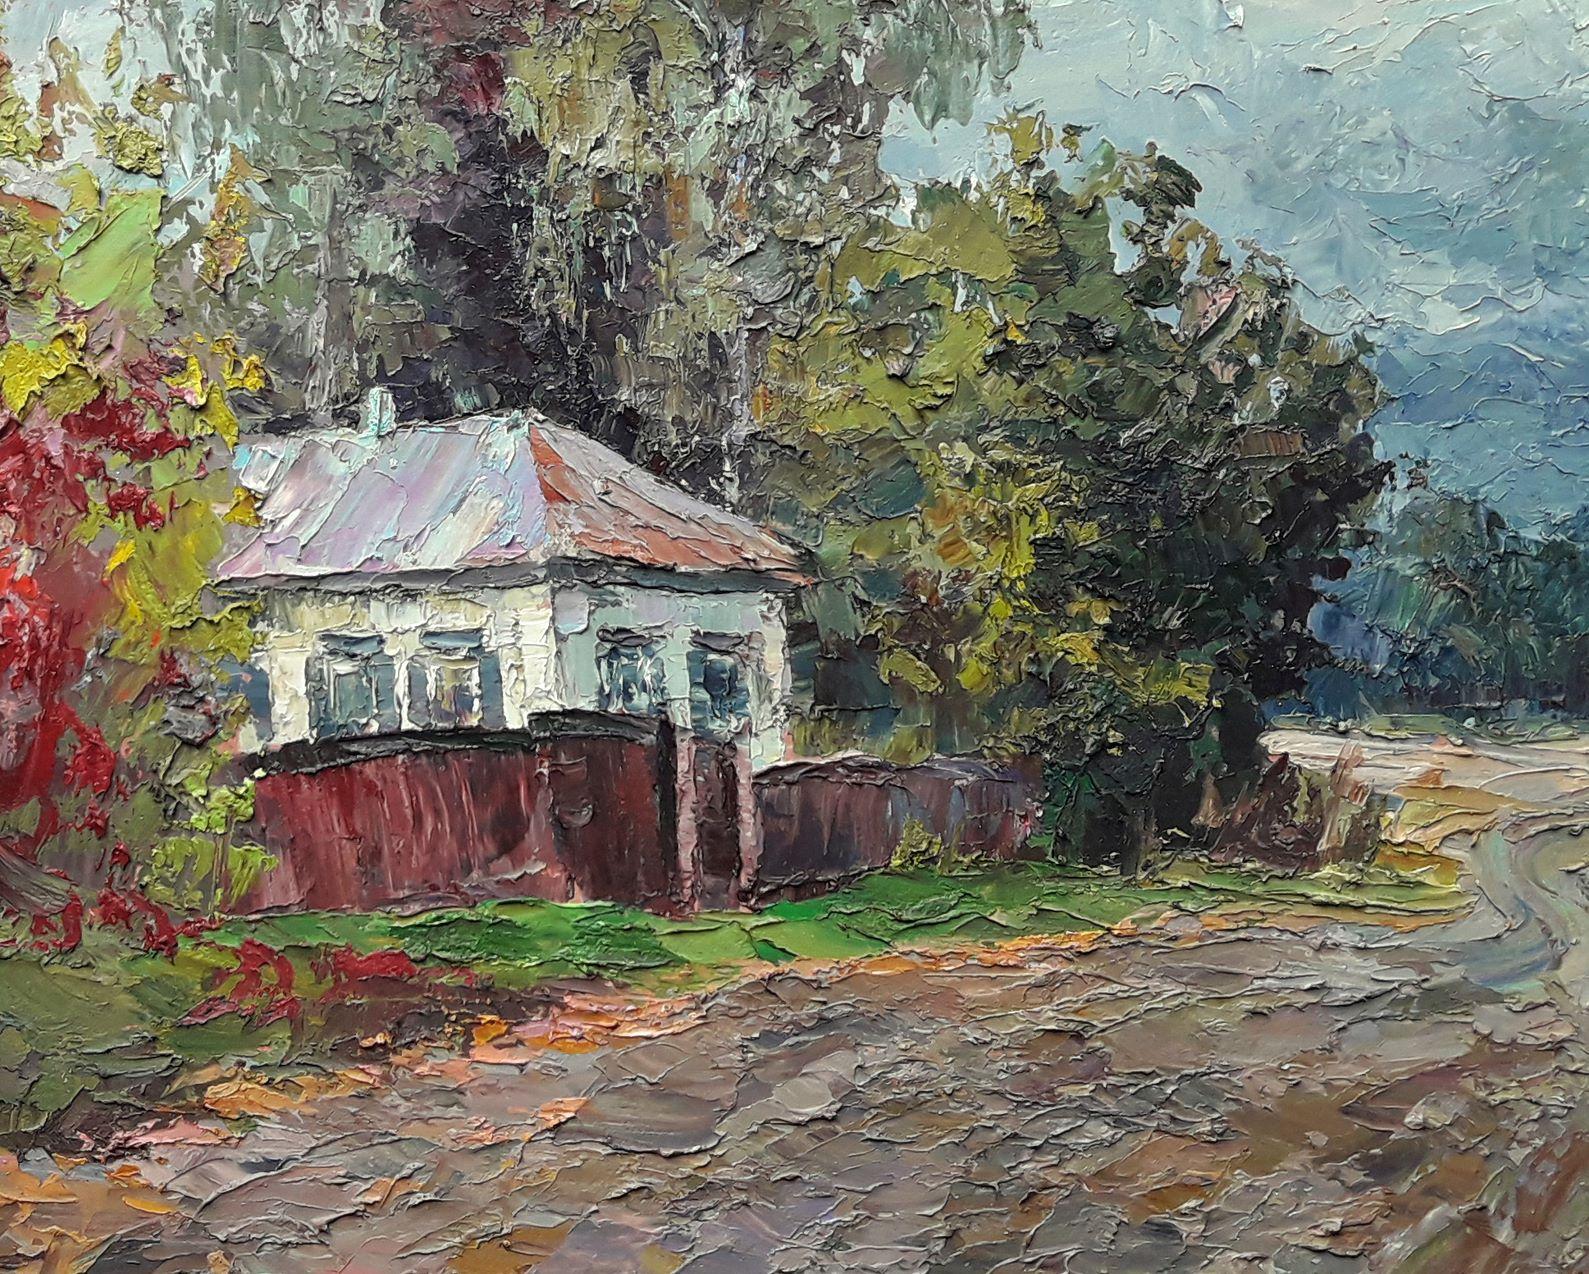 Artist: Boris Serdyuk 
Work: Original oil painting, handmade artwork, one of a kind 
Medium: Oil on Canvas
Style: Impressionism
Year: 2020
Title: Autumn in the village of Guta
Size: 19.5